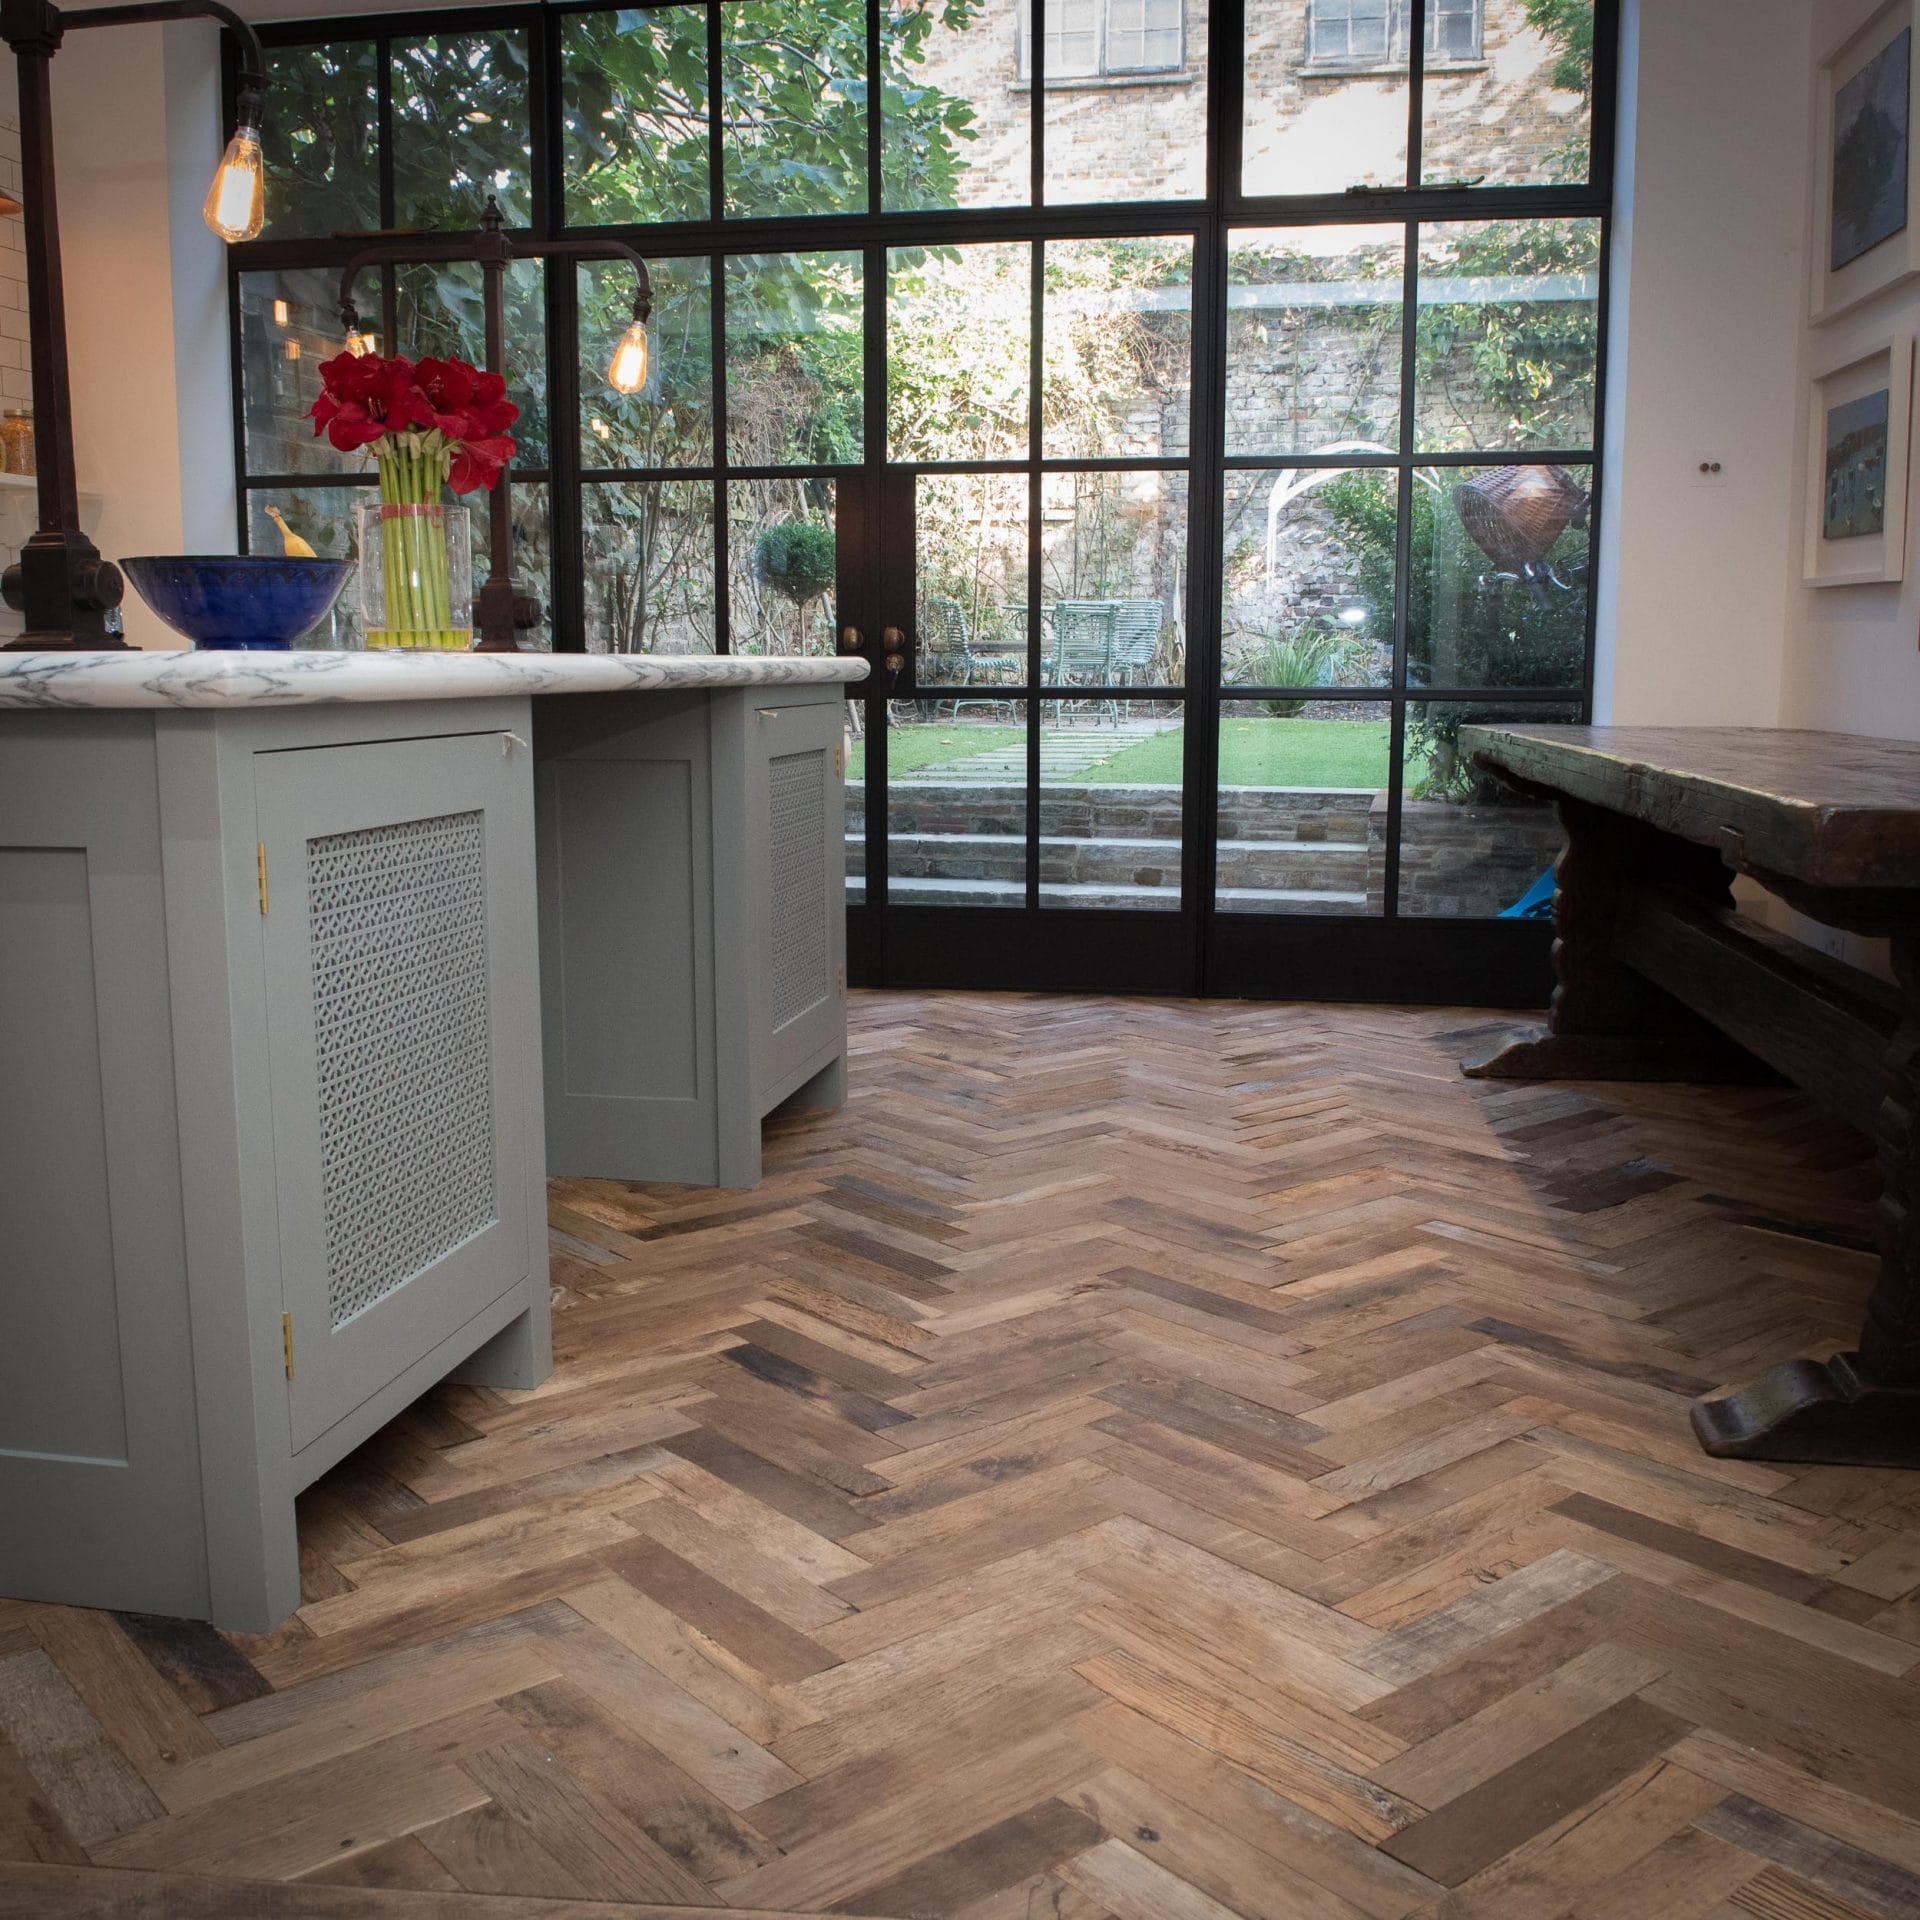 Reclaimed Oak Herringbone Parquet Wood Flooring in kitchen with crittall windows